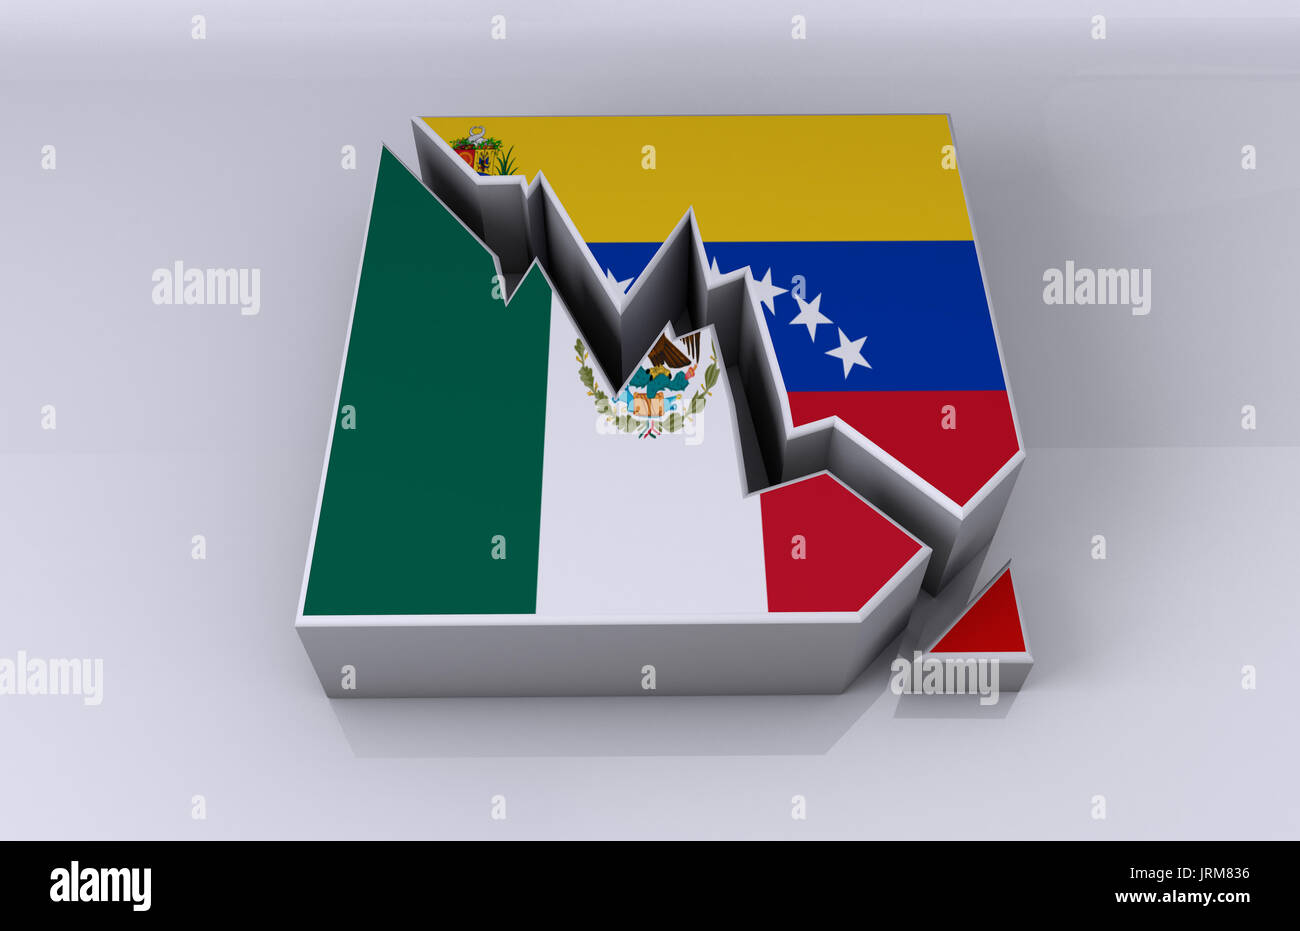 Mexico and Venezuela business relations Stock Photo